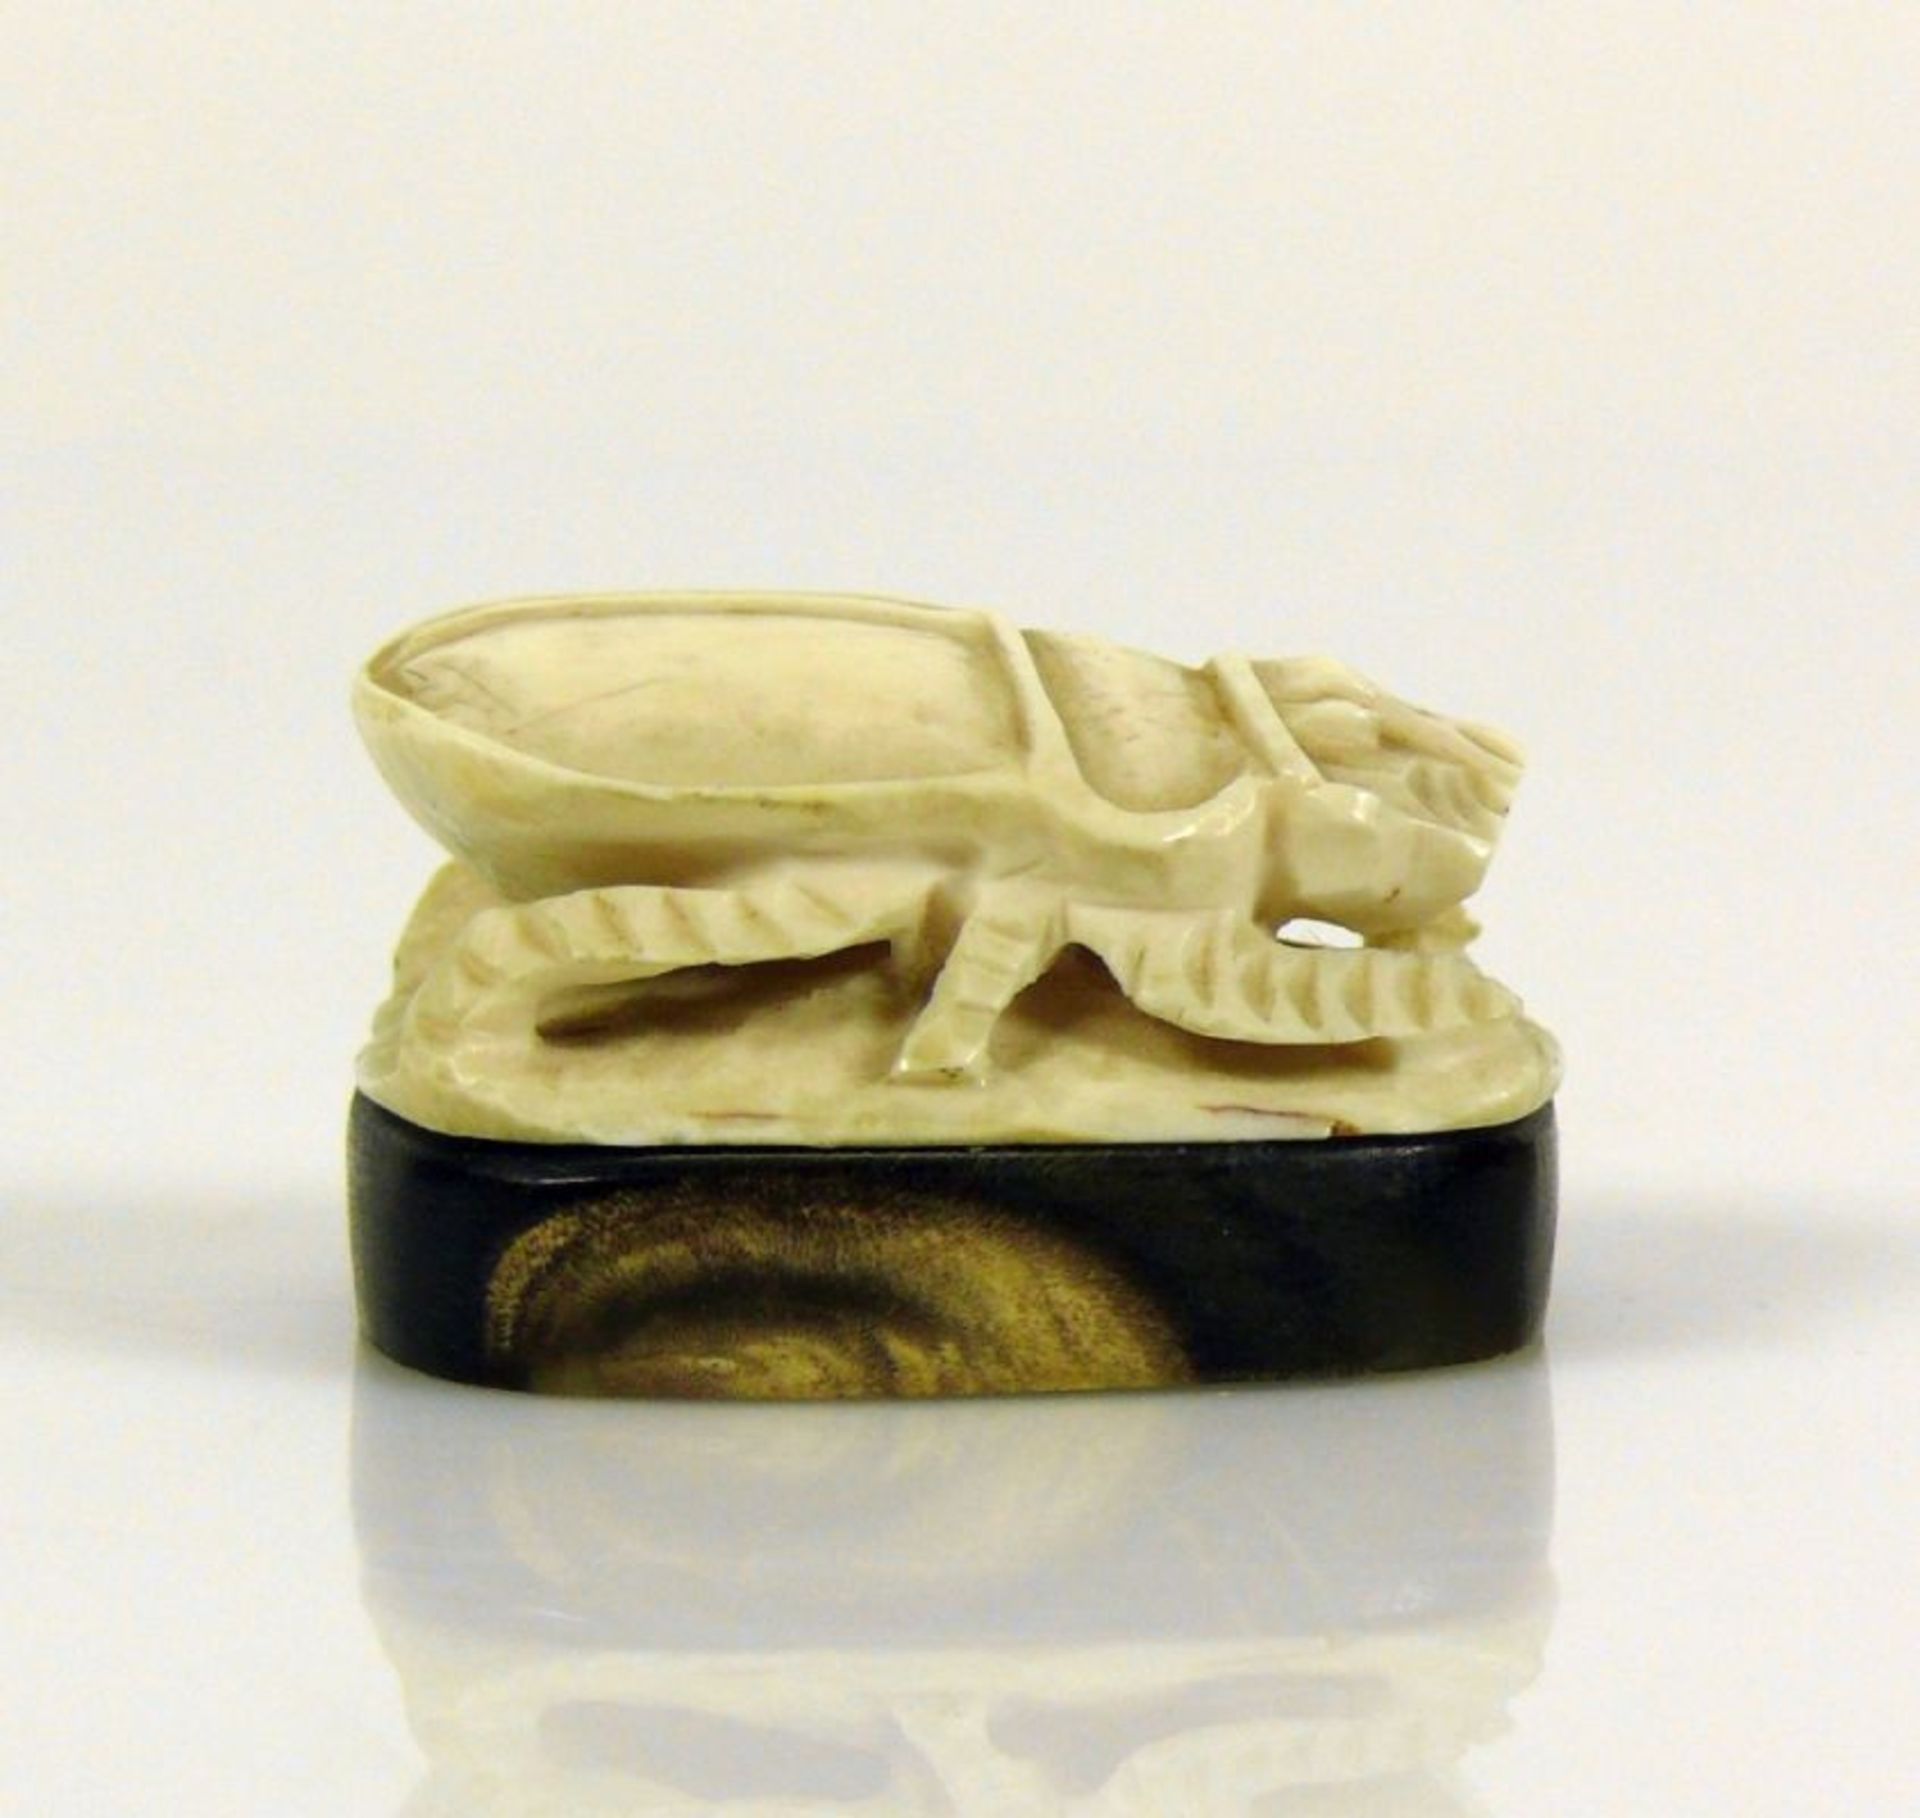 Käfer (Japan, um 1900) Elfenbein; auf ovalem Sockel; 2,5 x 4,5 x 3 cm - Bild 4 aus 7